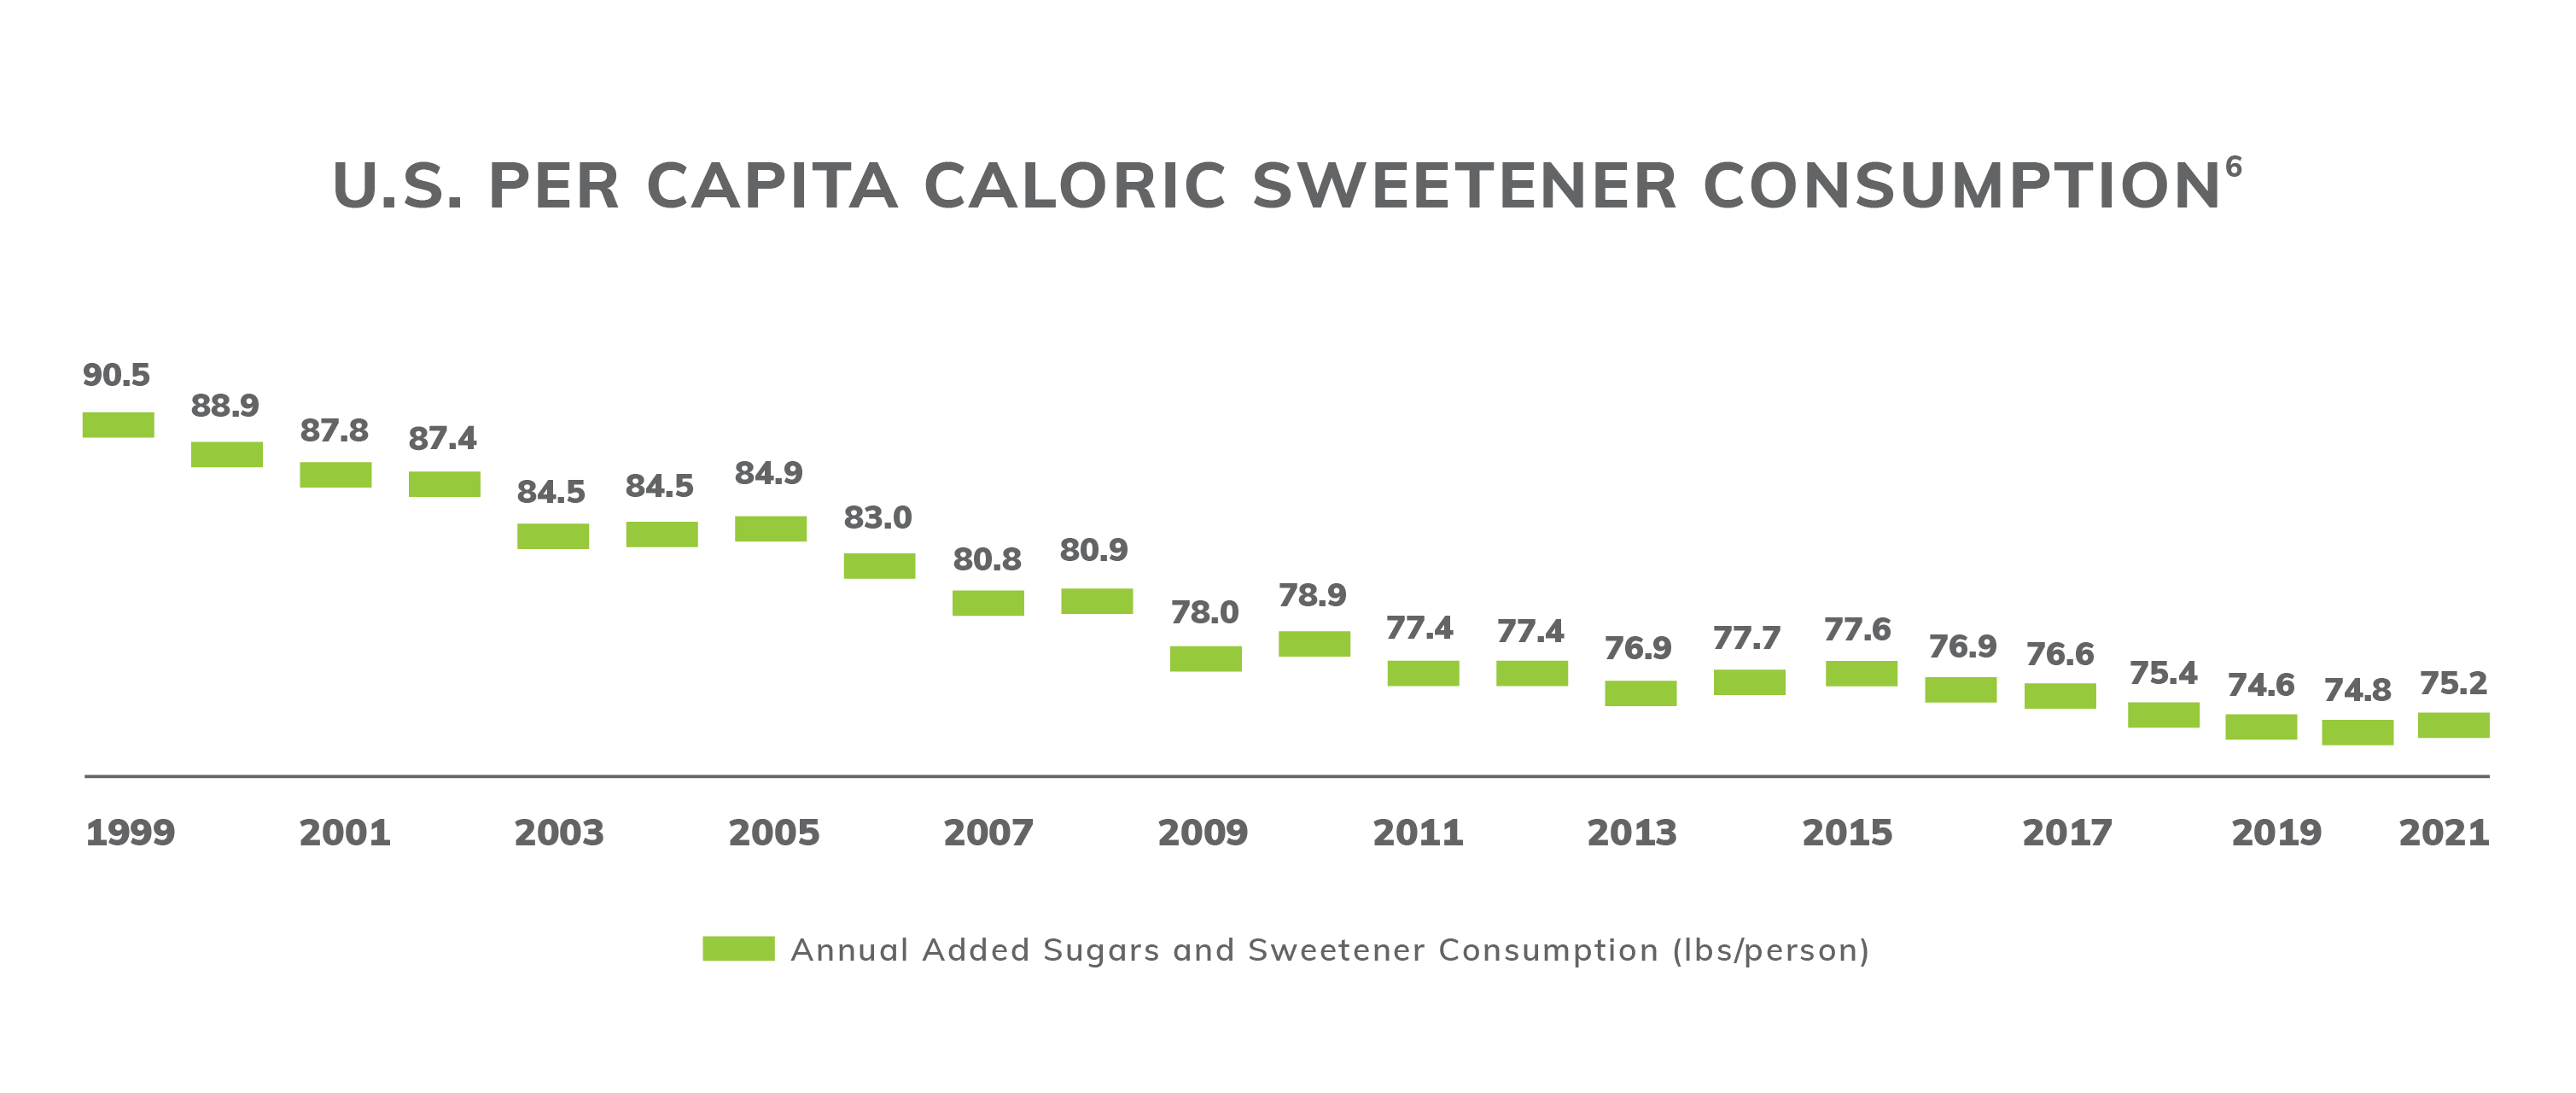 U.S Per Capita Caloric Sweetener Consumption